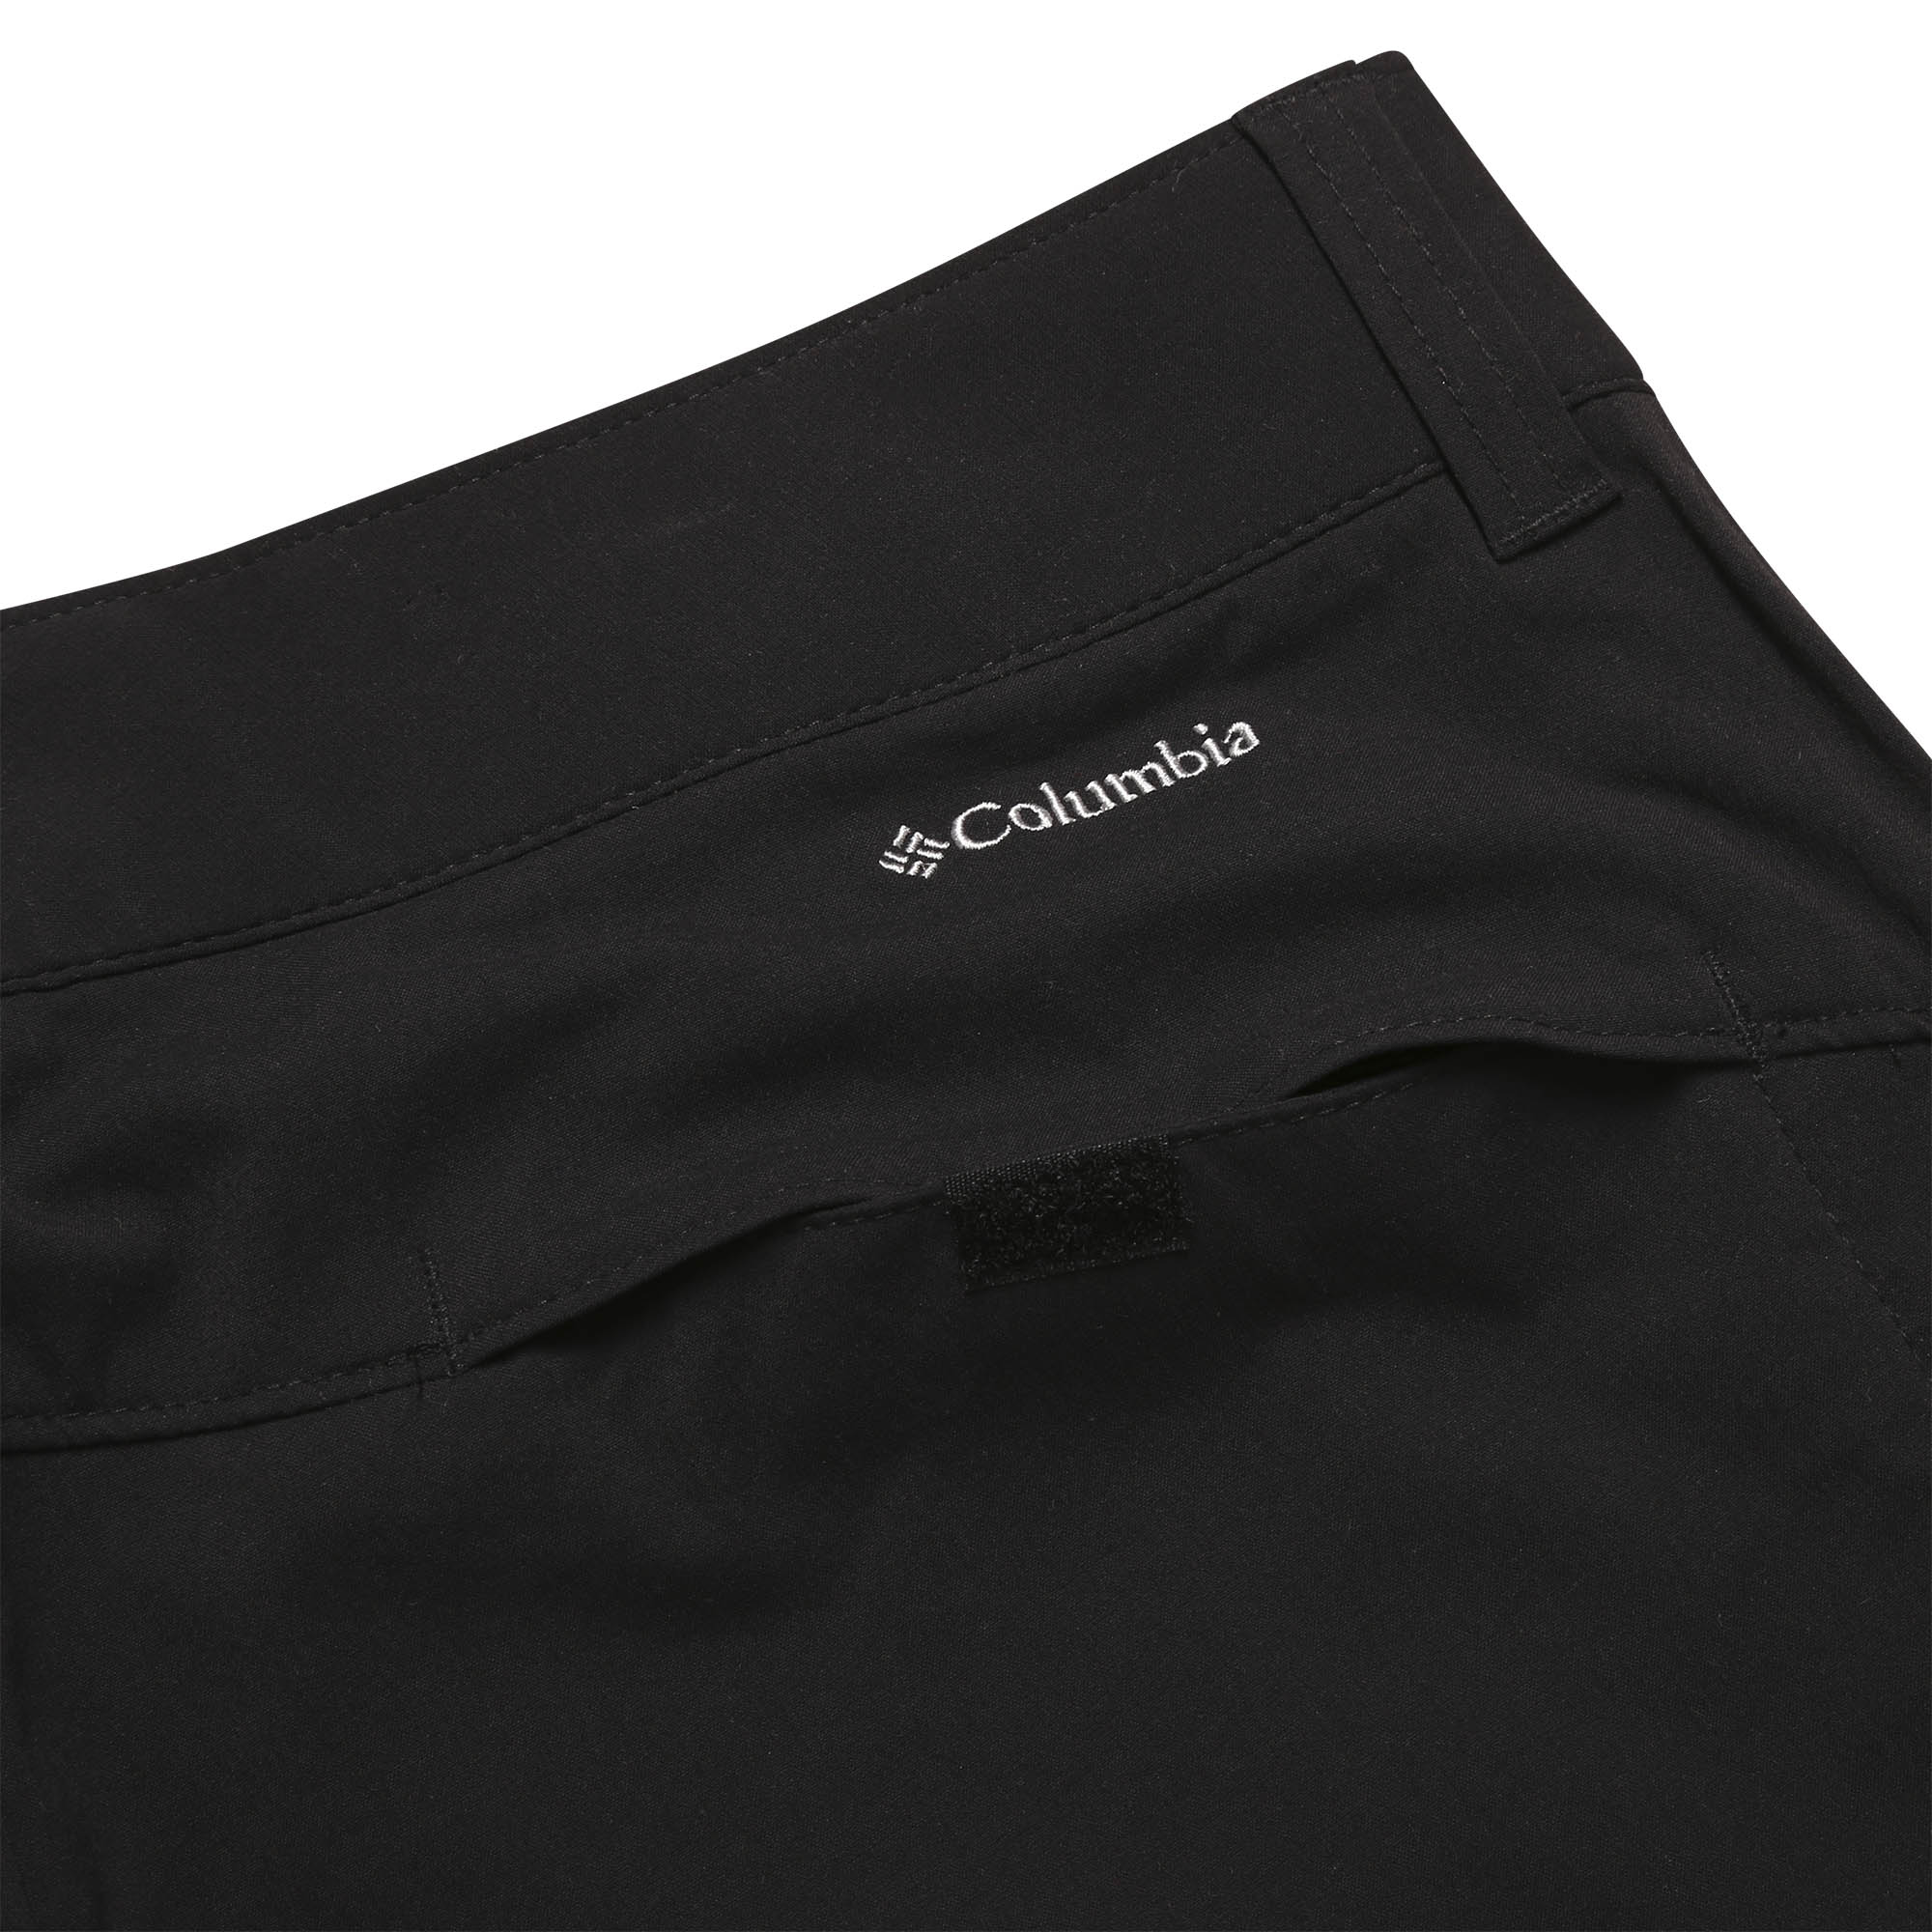 Columbia women's Omni-Shield Advanced Repellency Pants -Size 8 Regular